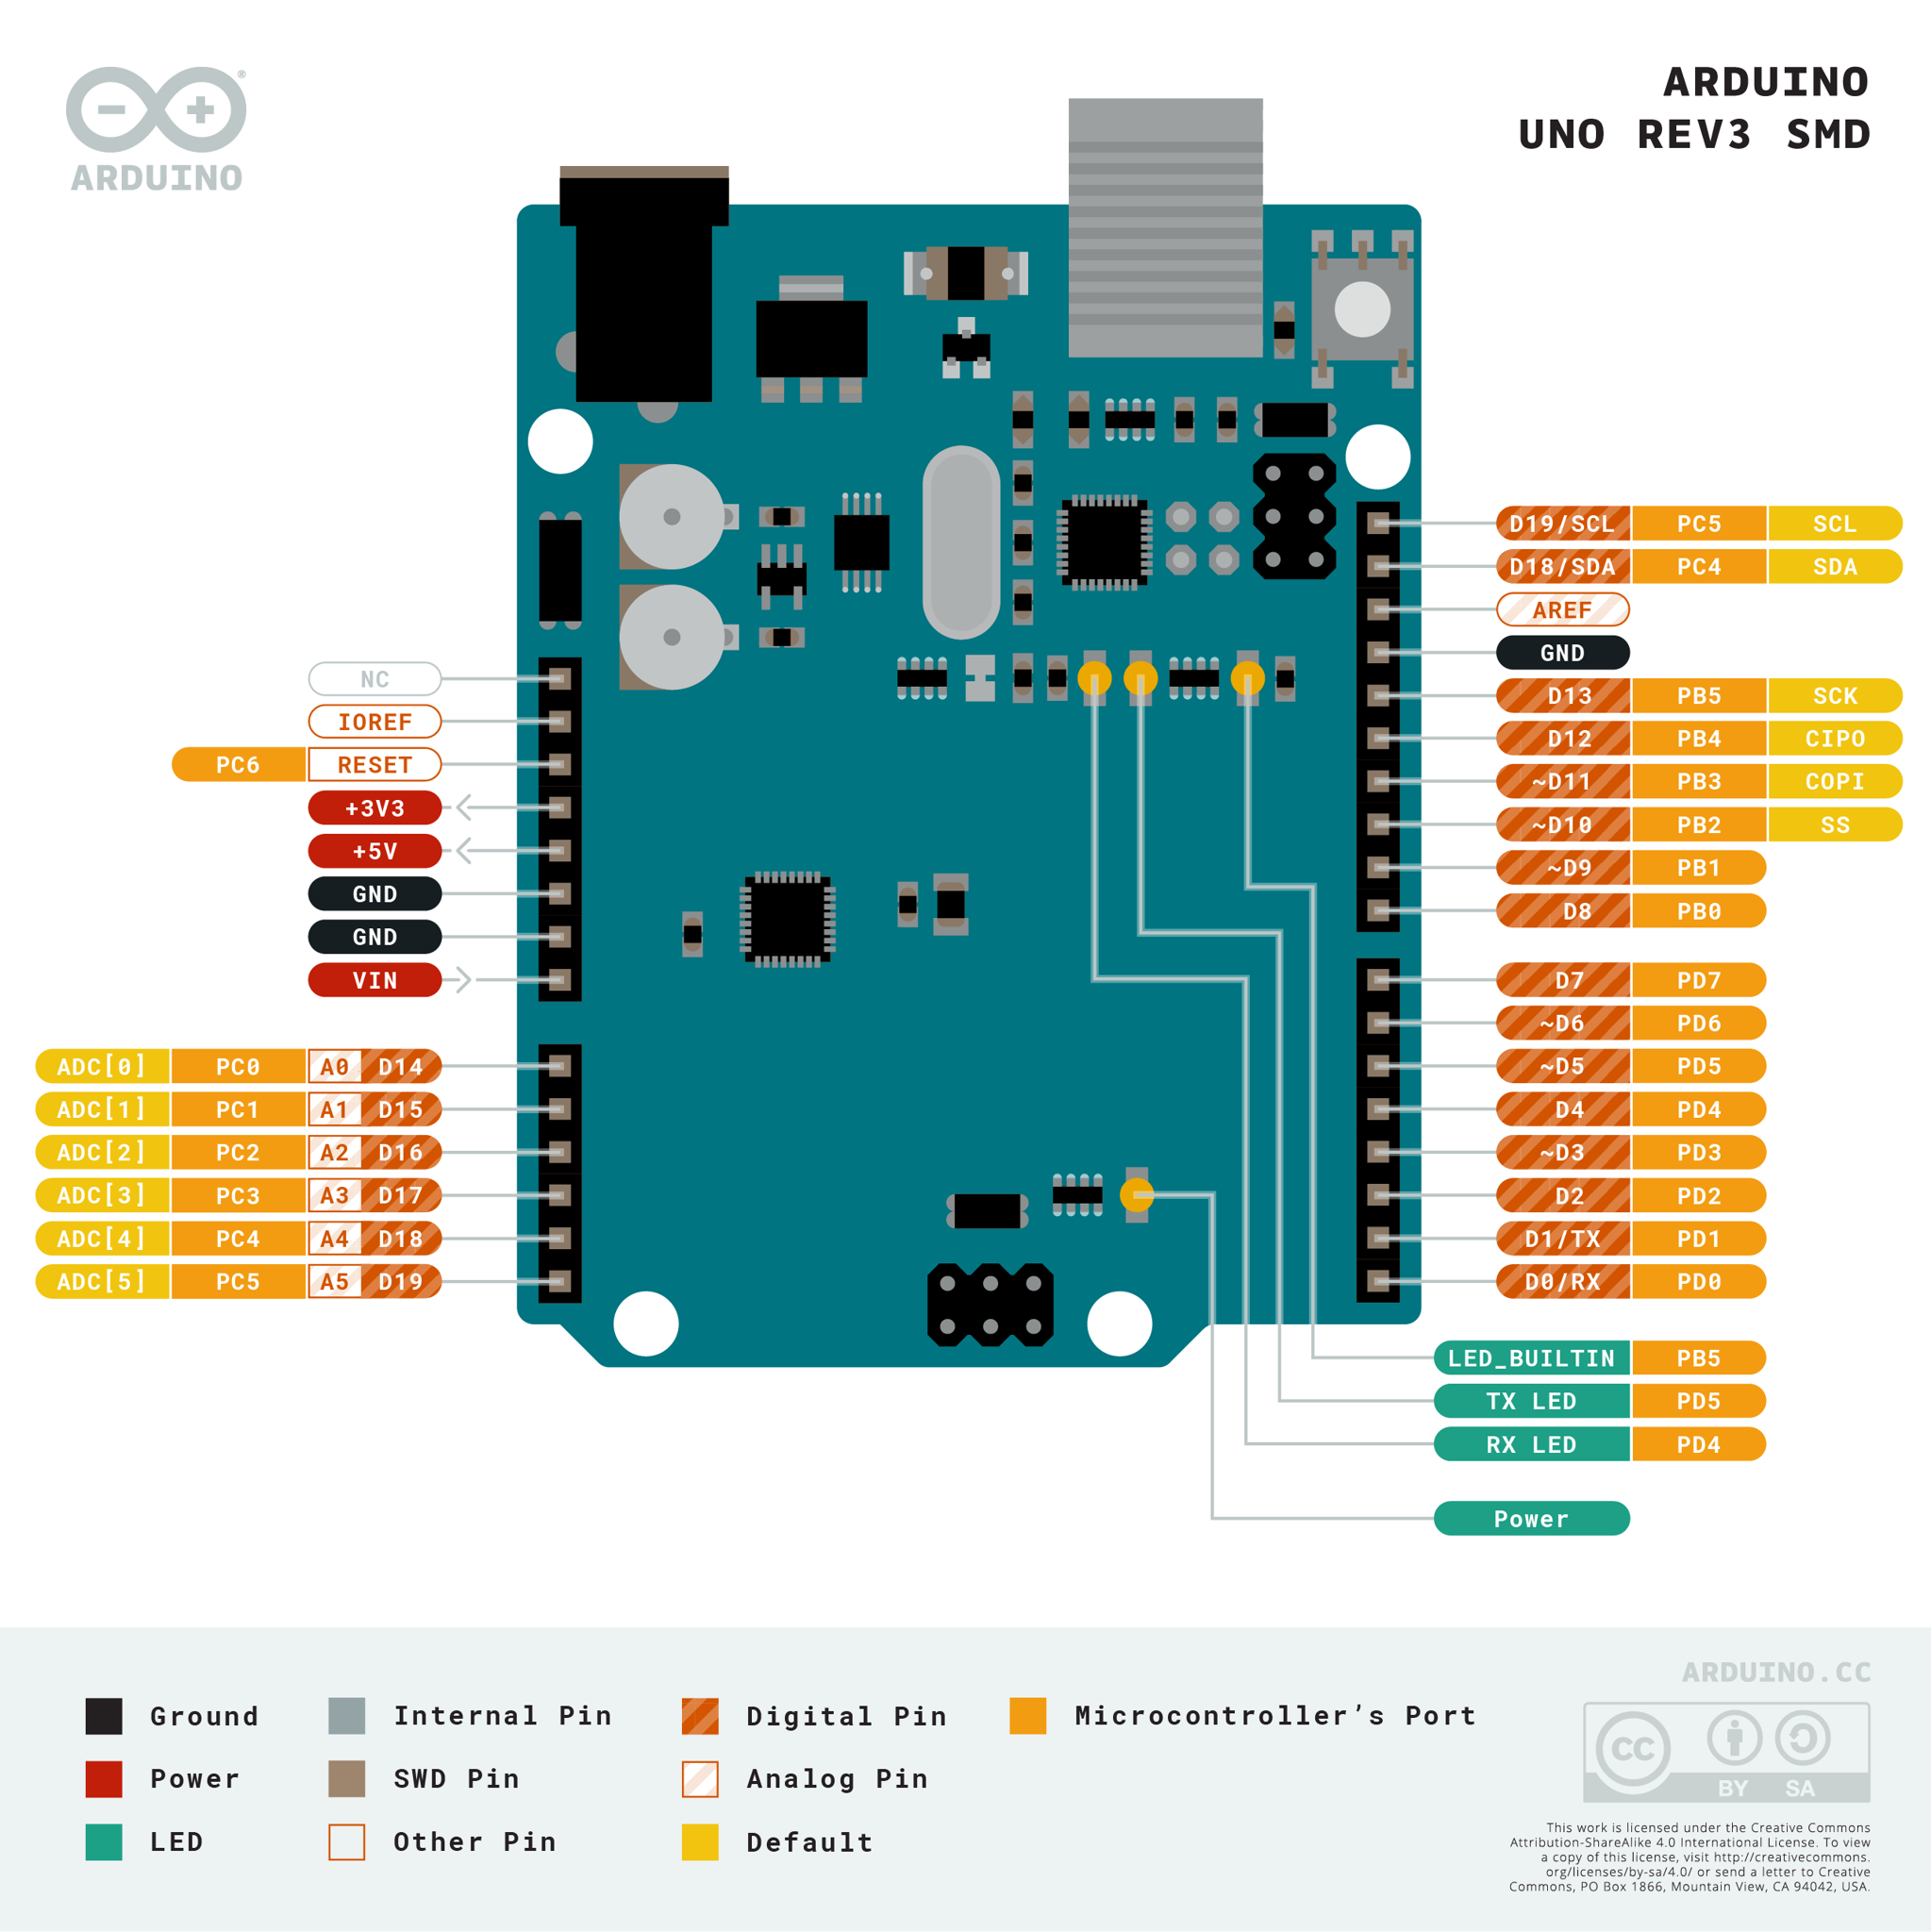 Arduino Uno Rev3 SMD chính hãng (Original - Made in Italy)